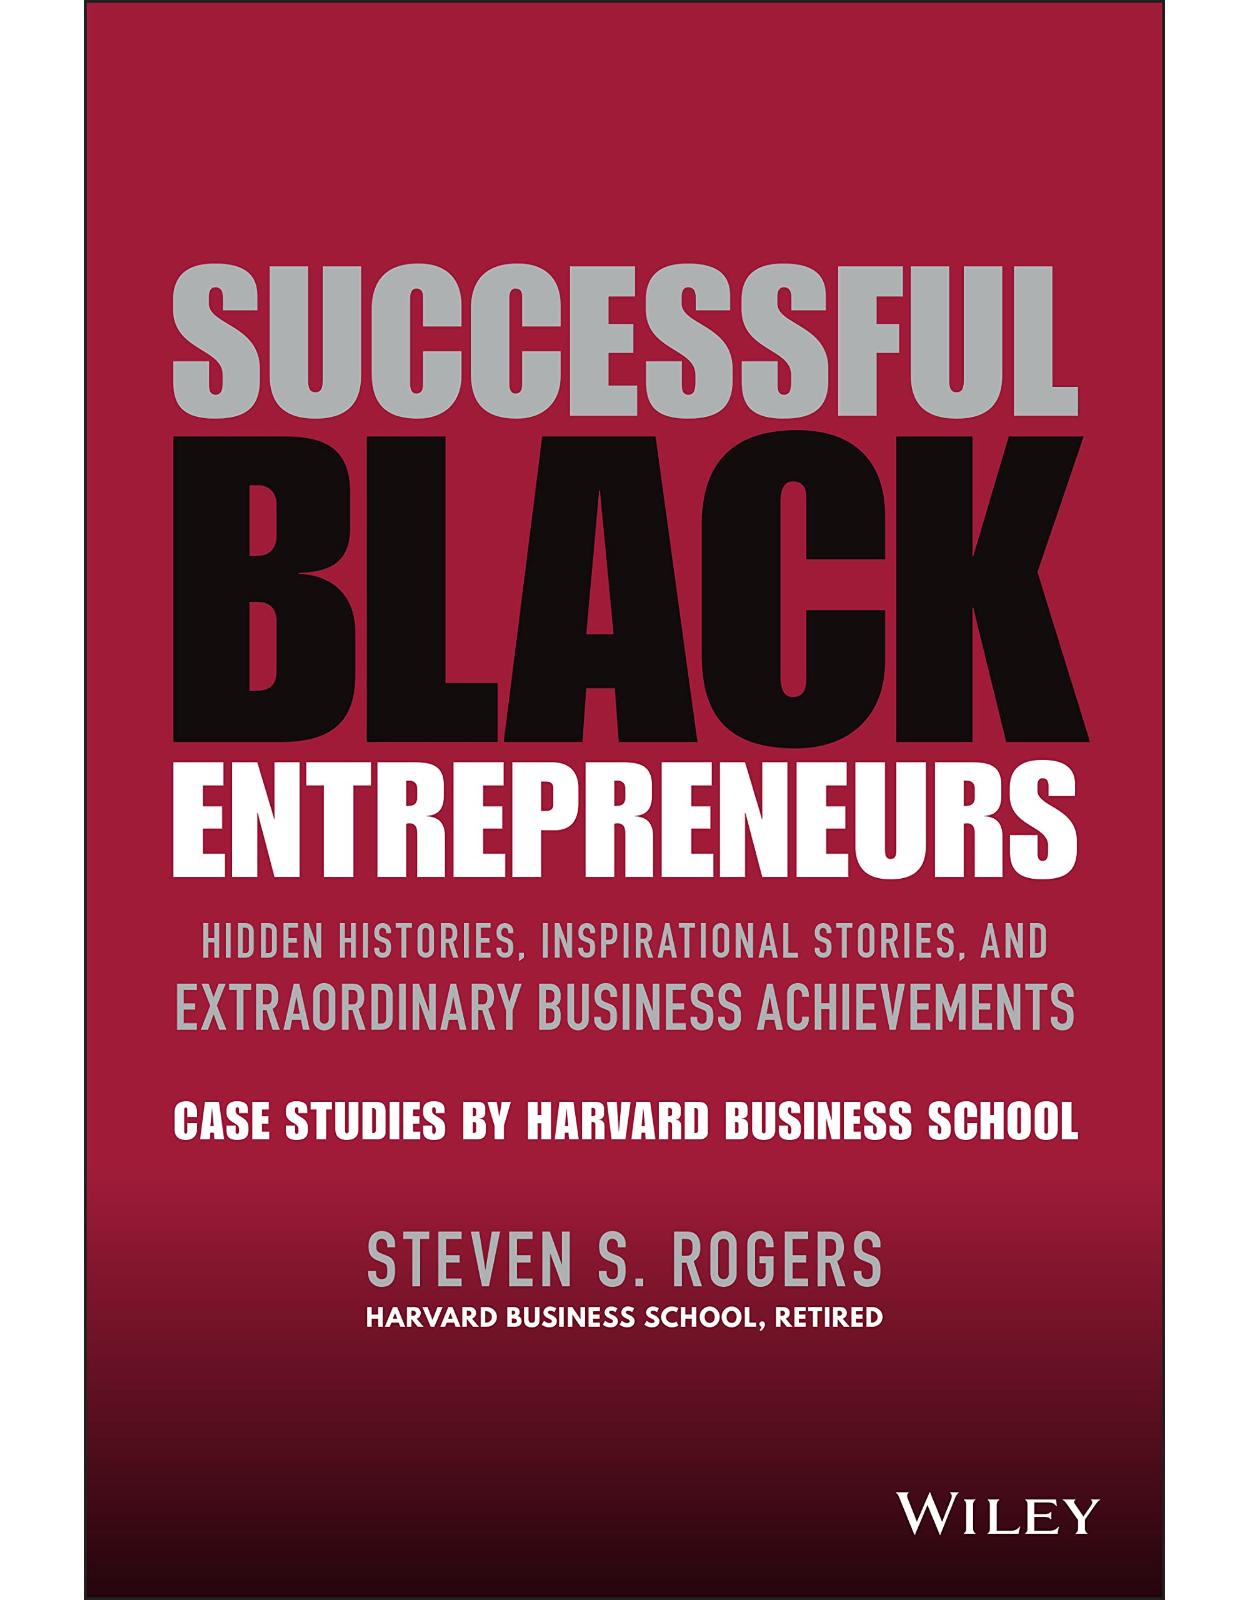 Successful Black Entrepreneurs : Hidden Histories, Inspirational Stories, and Extraordinary Business Achievements